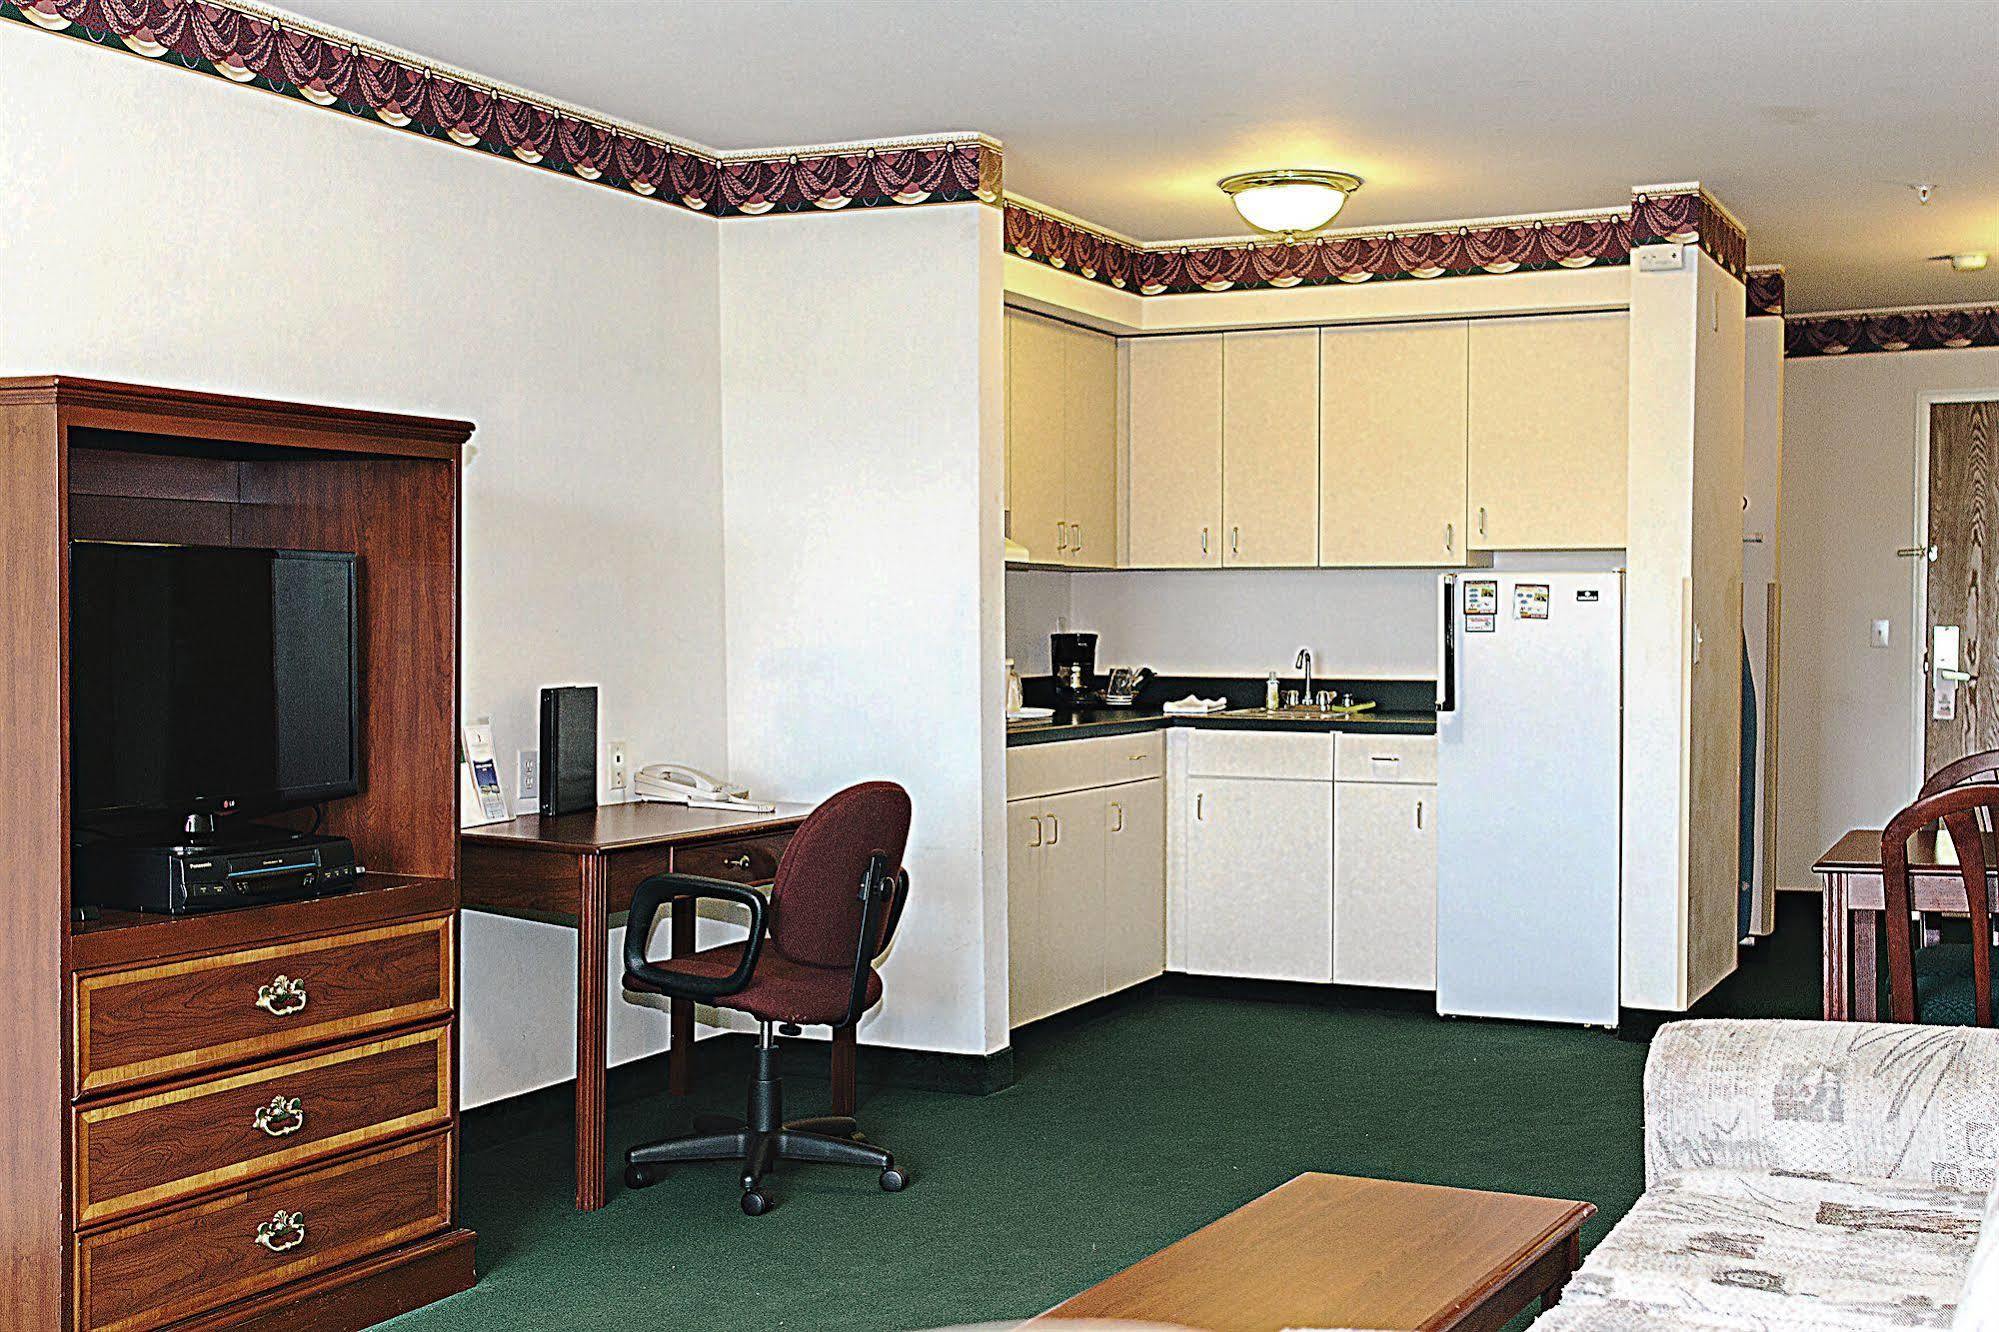 Fairbridge Inn & Suites Dupont Exterior photo